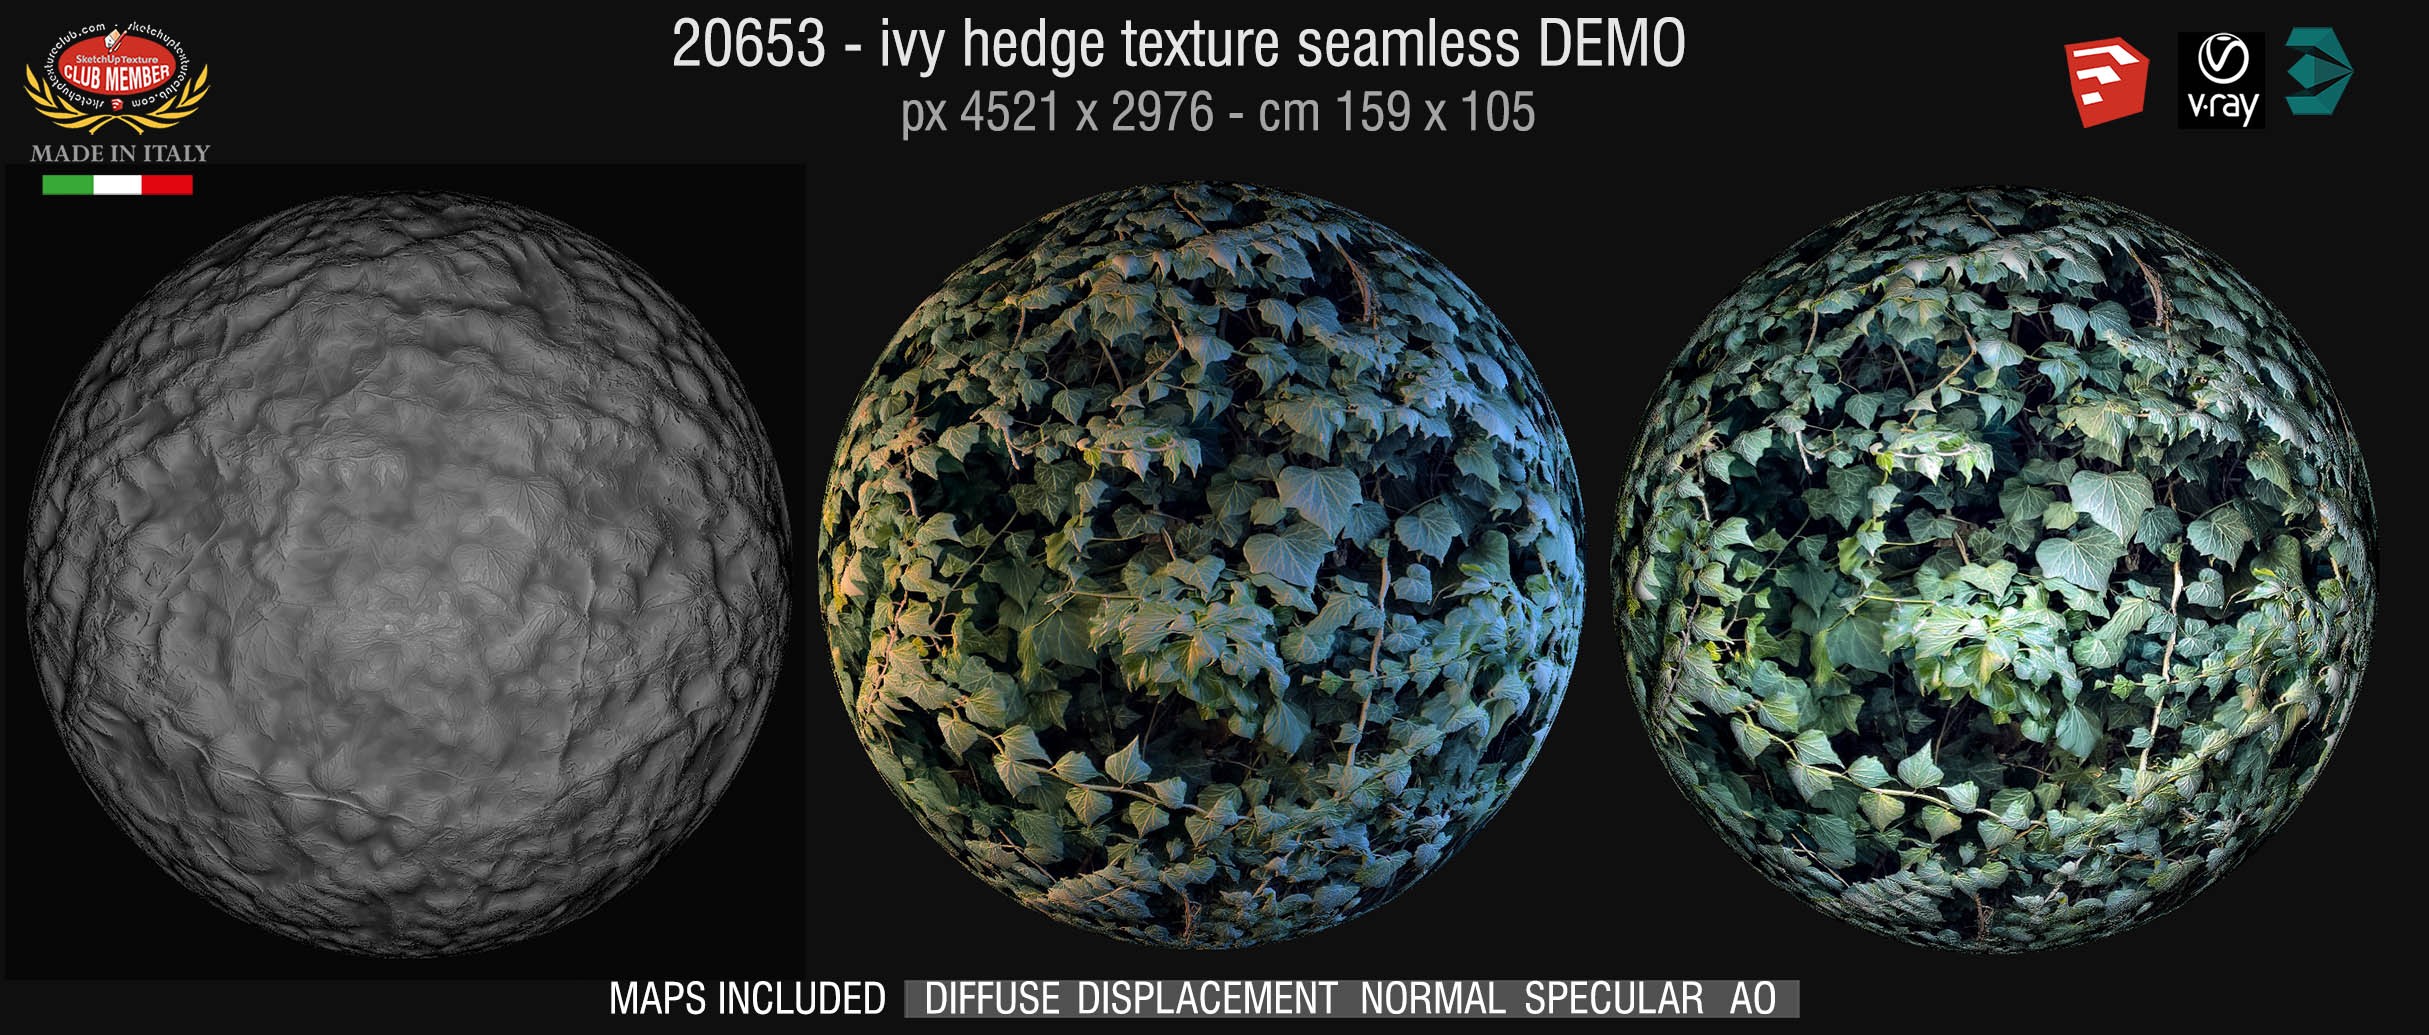 20192 HR Ivy hedge texture + maps DEMO